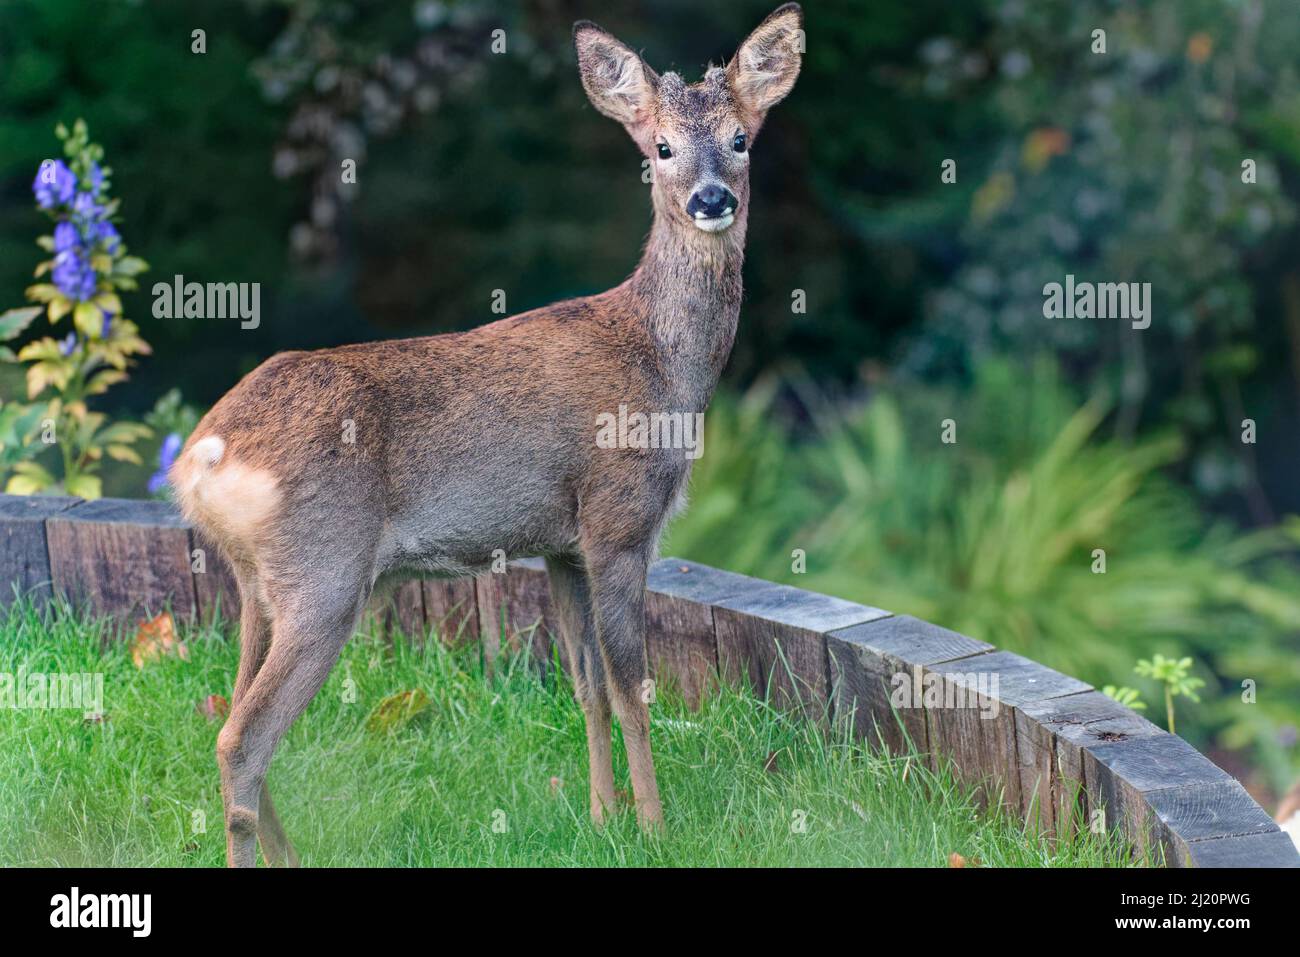 Alert young Roe deer (Capreolus capreolus) buck with developing horns standing on a terraced garden lawn, Wiltshire garden, UK, October. Stock Photo